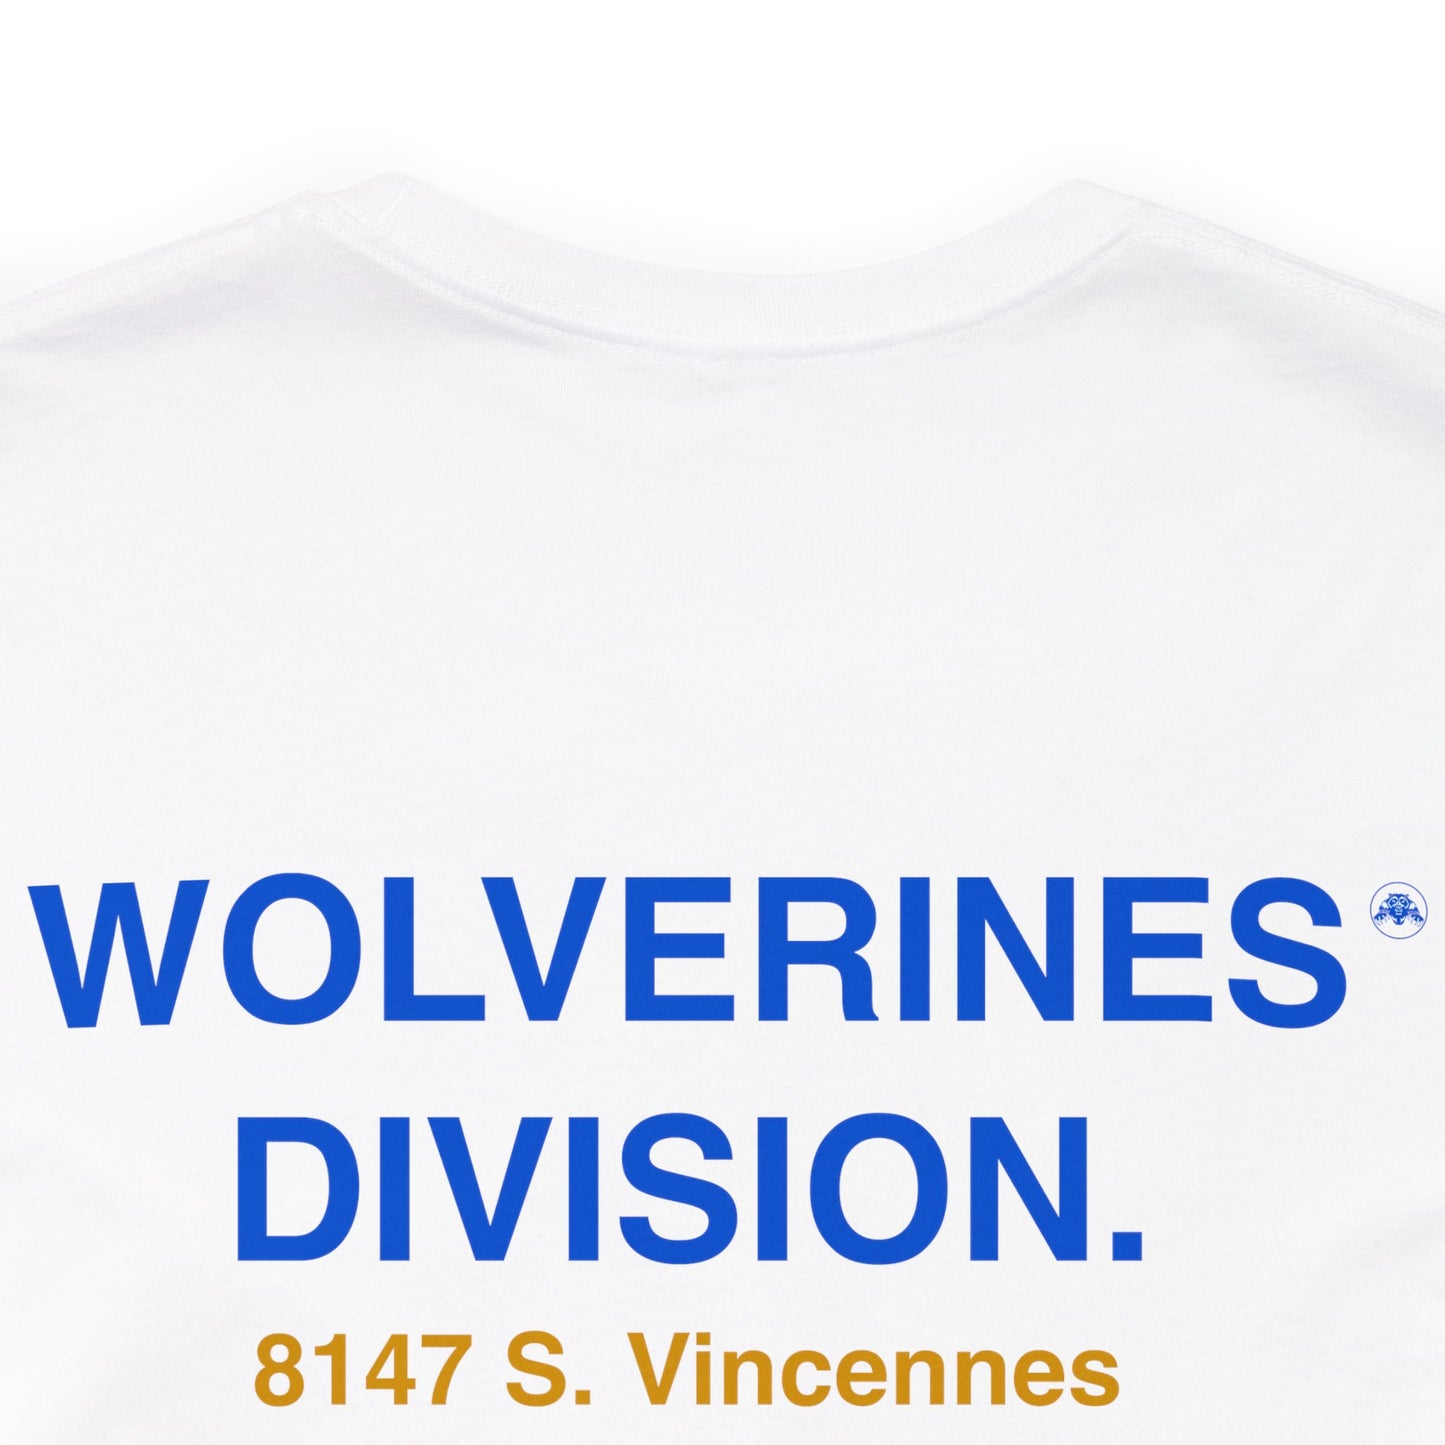 Simeon Wolverines | Simeon Career Academy Tee Shirt